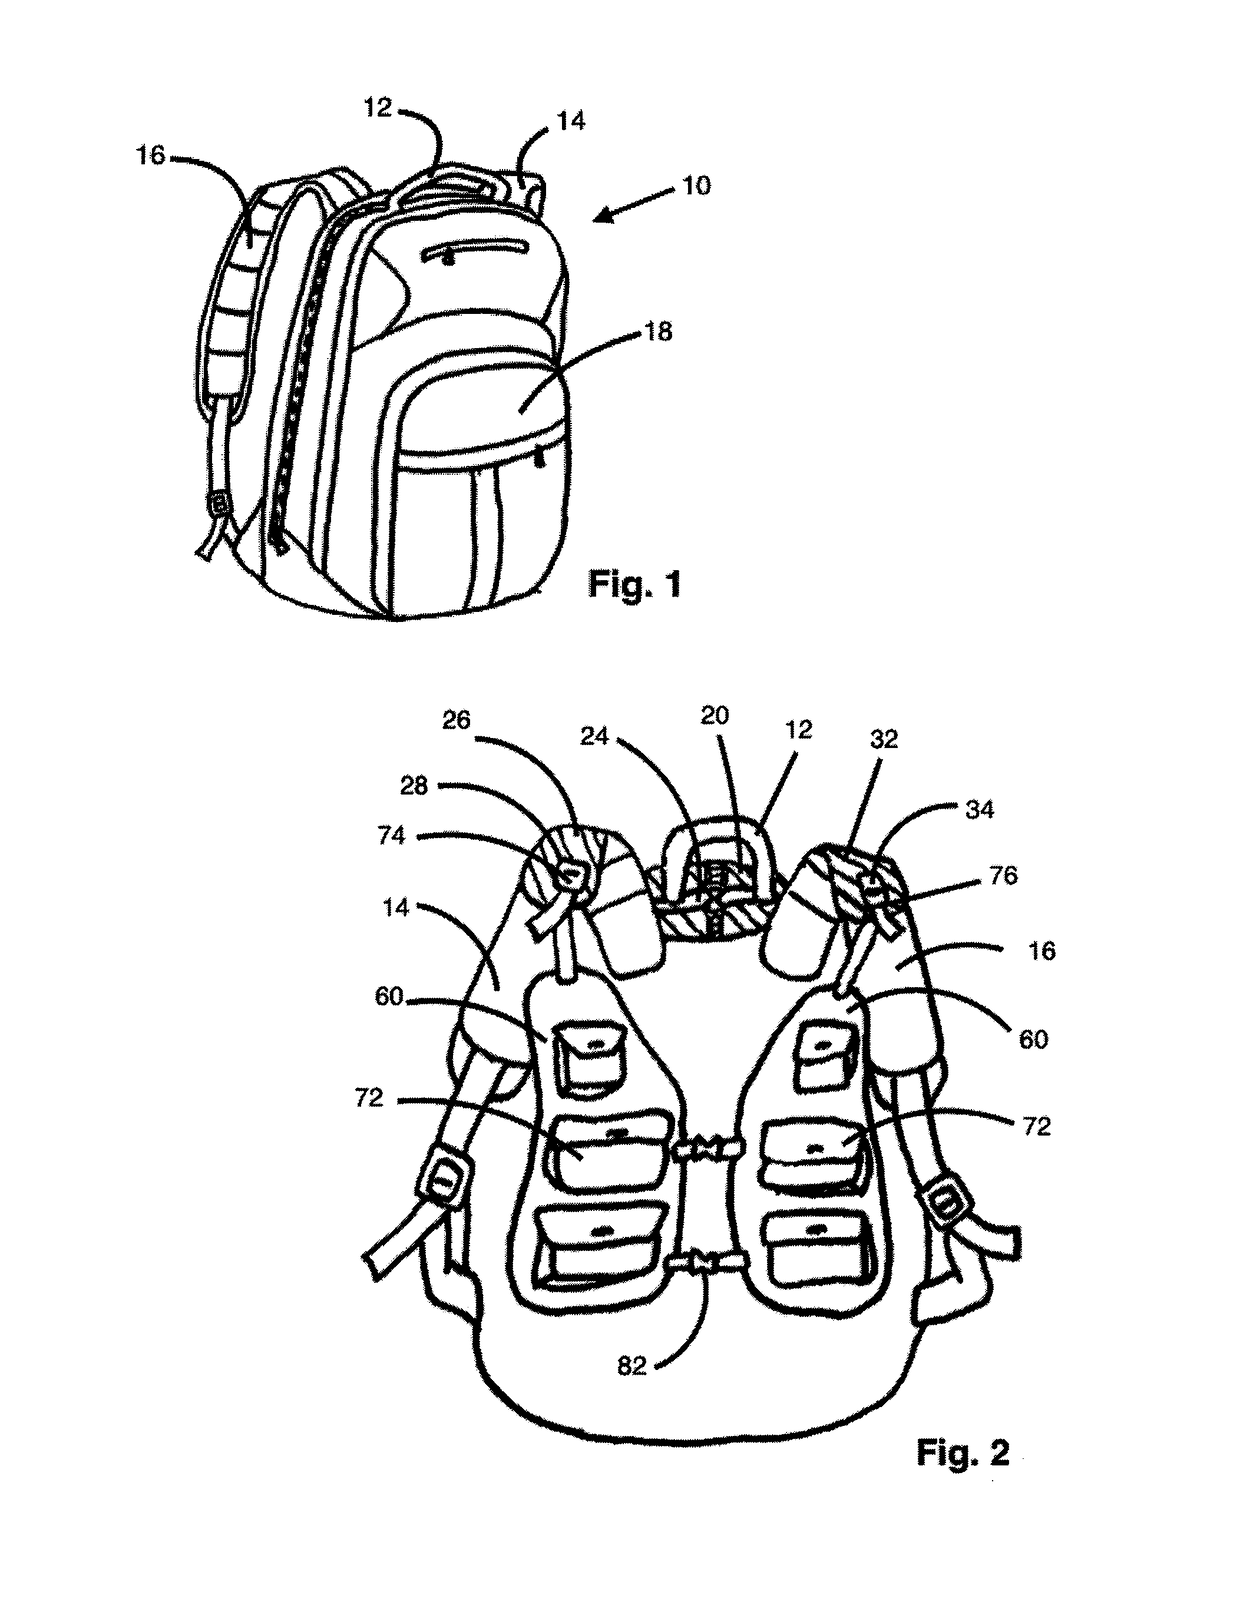 Modular vest system